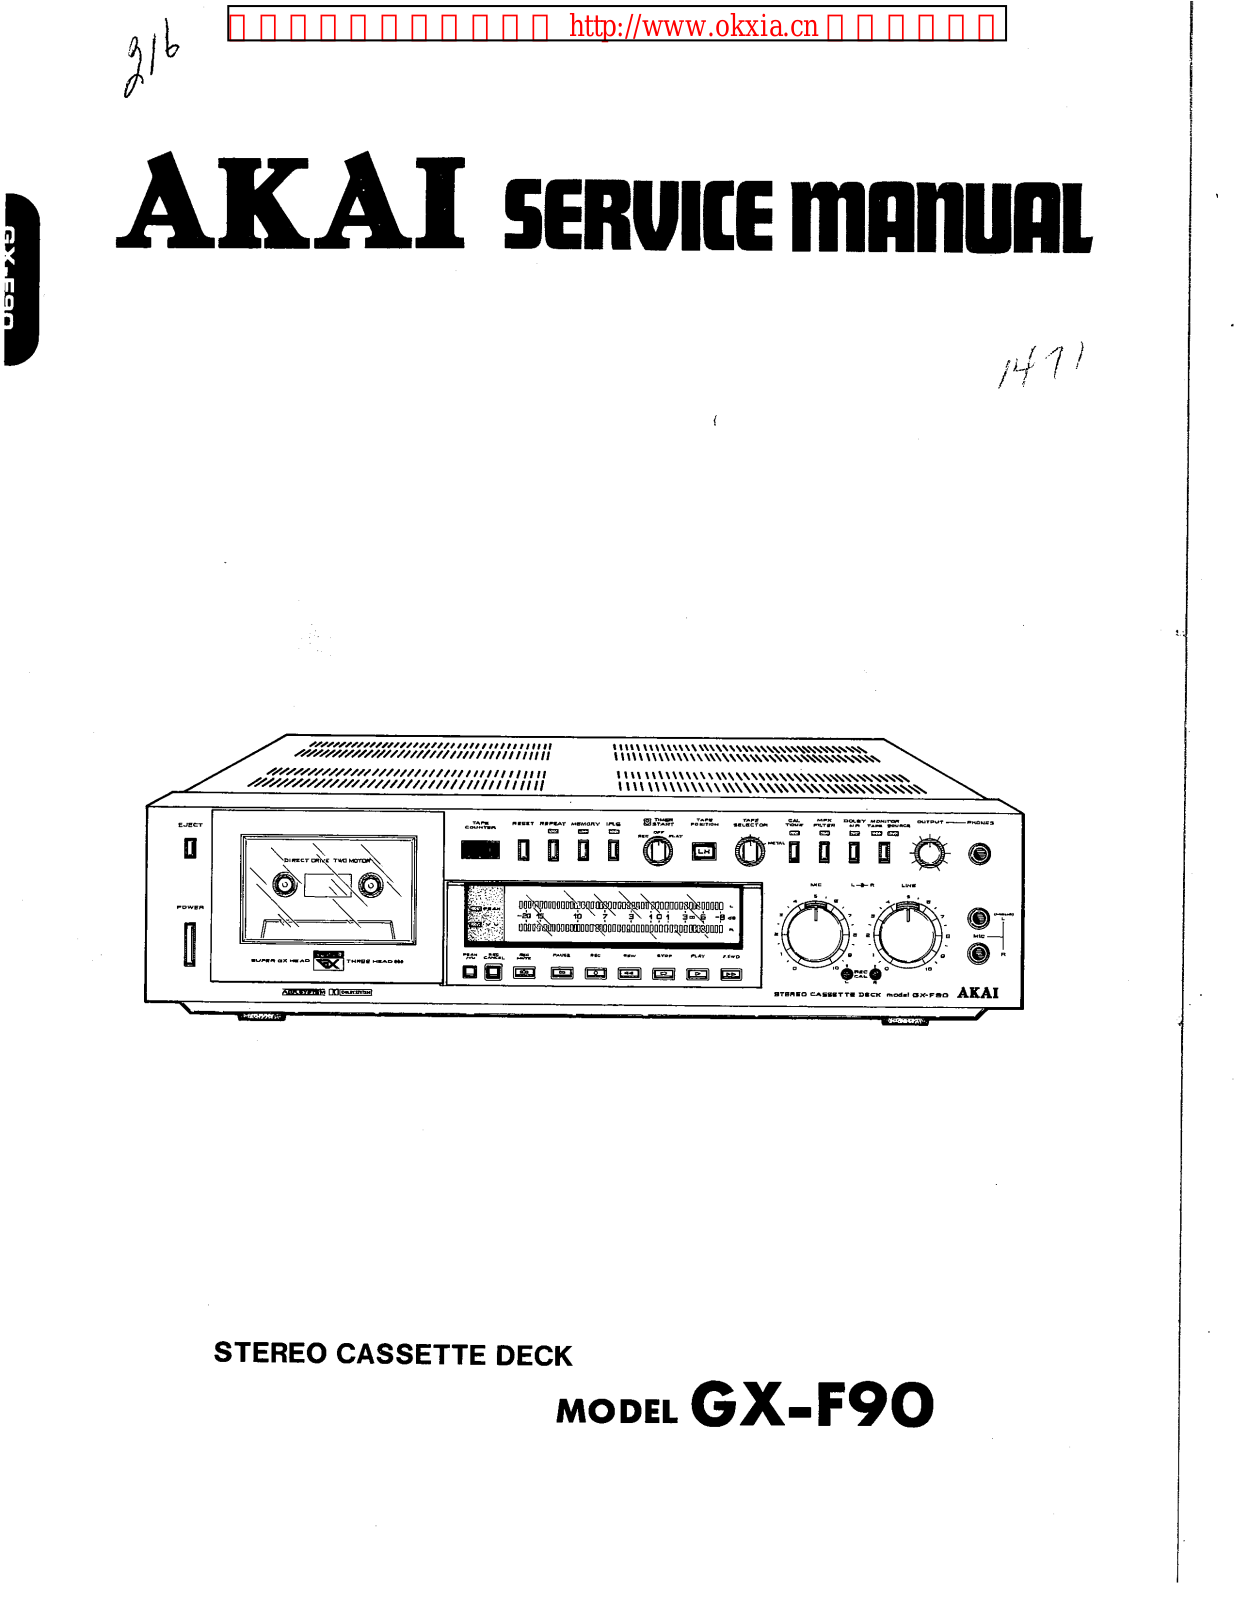 Akai GX-F90 Service Manual